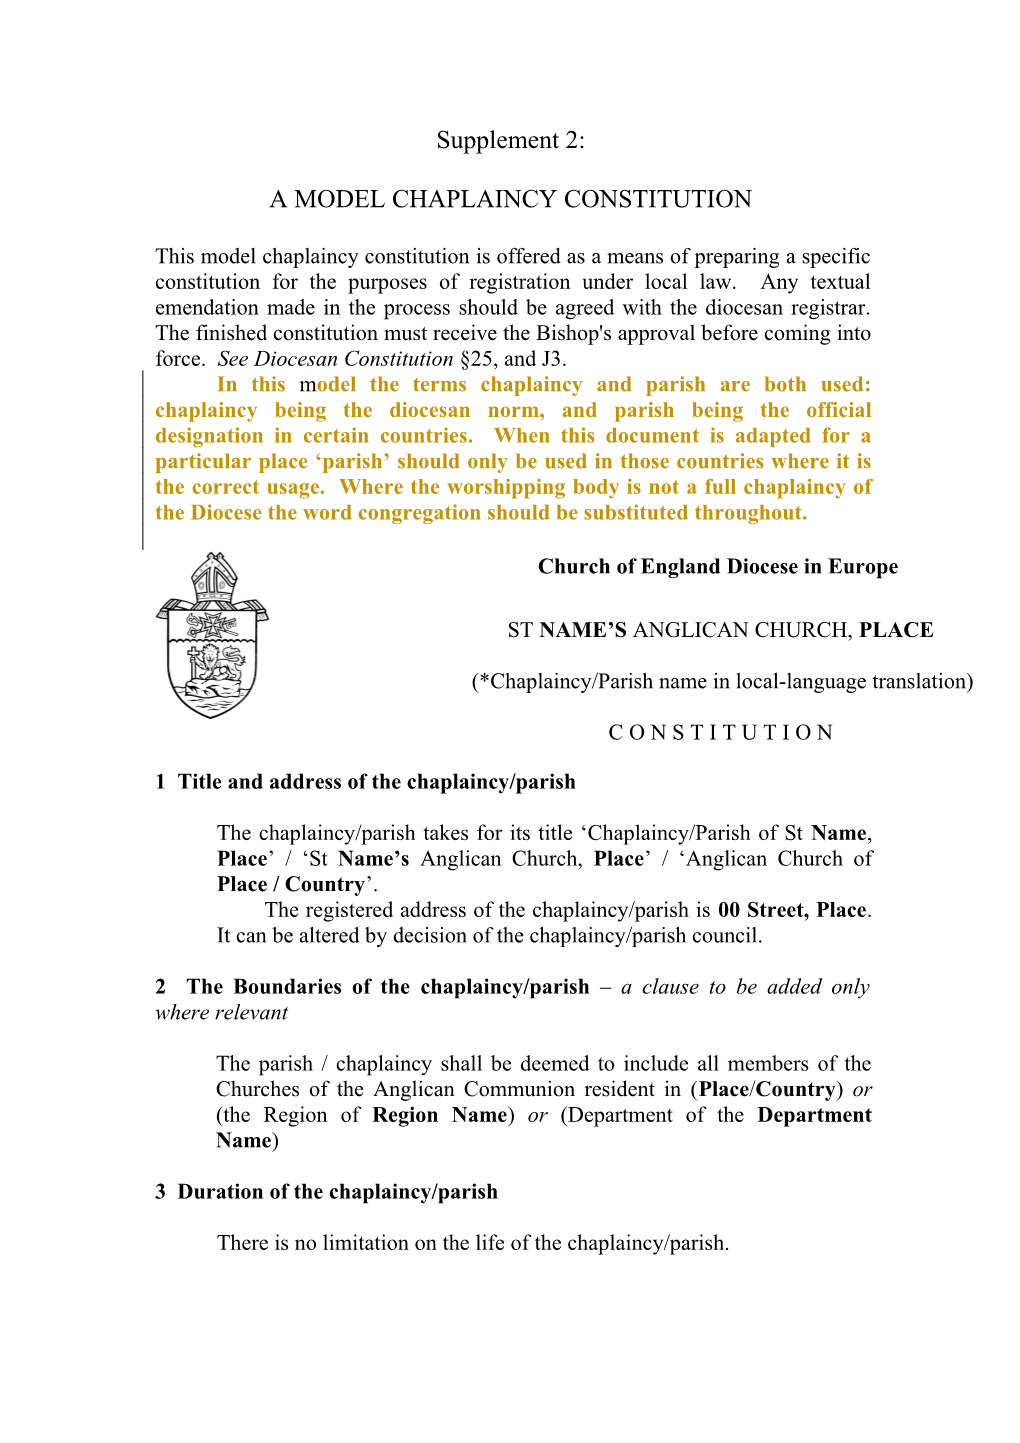 A Model Chaplaincy Constitution